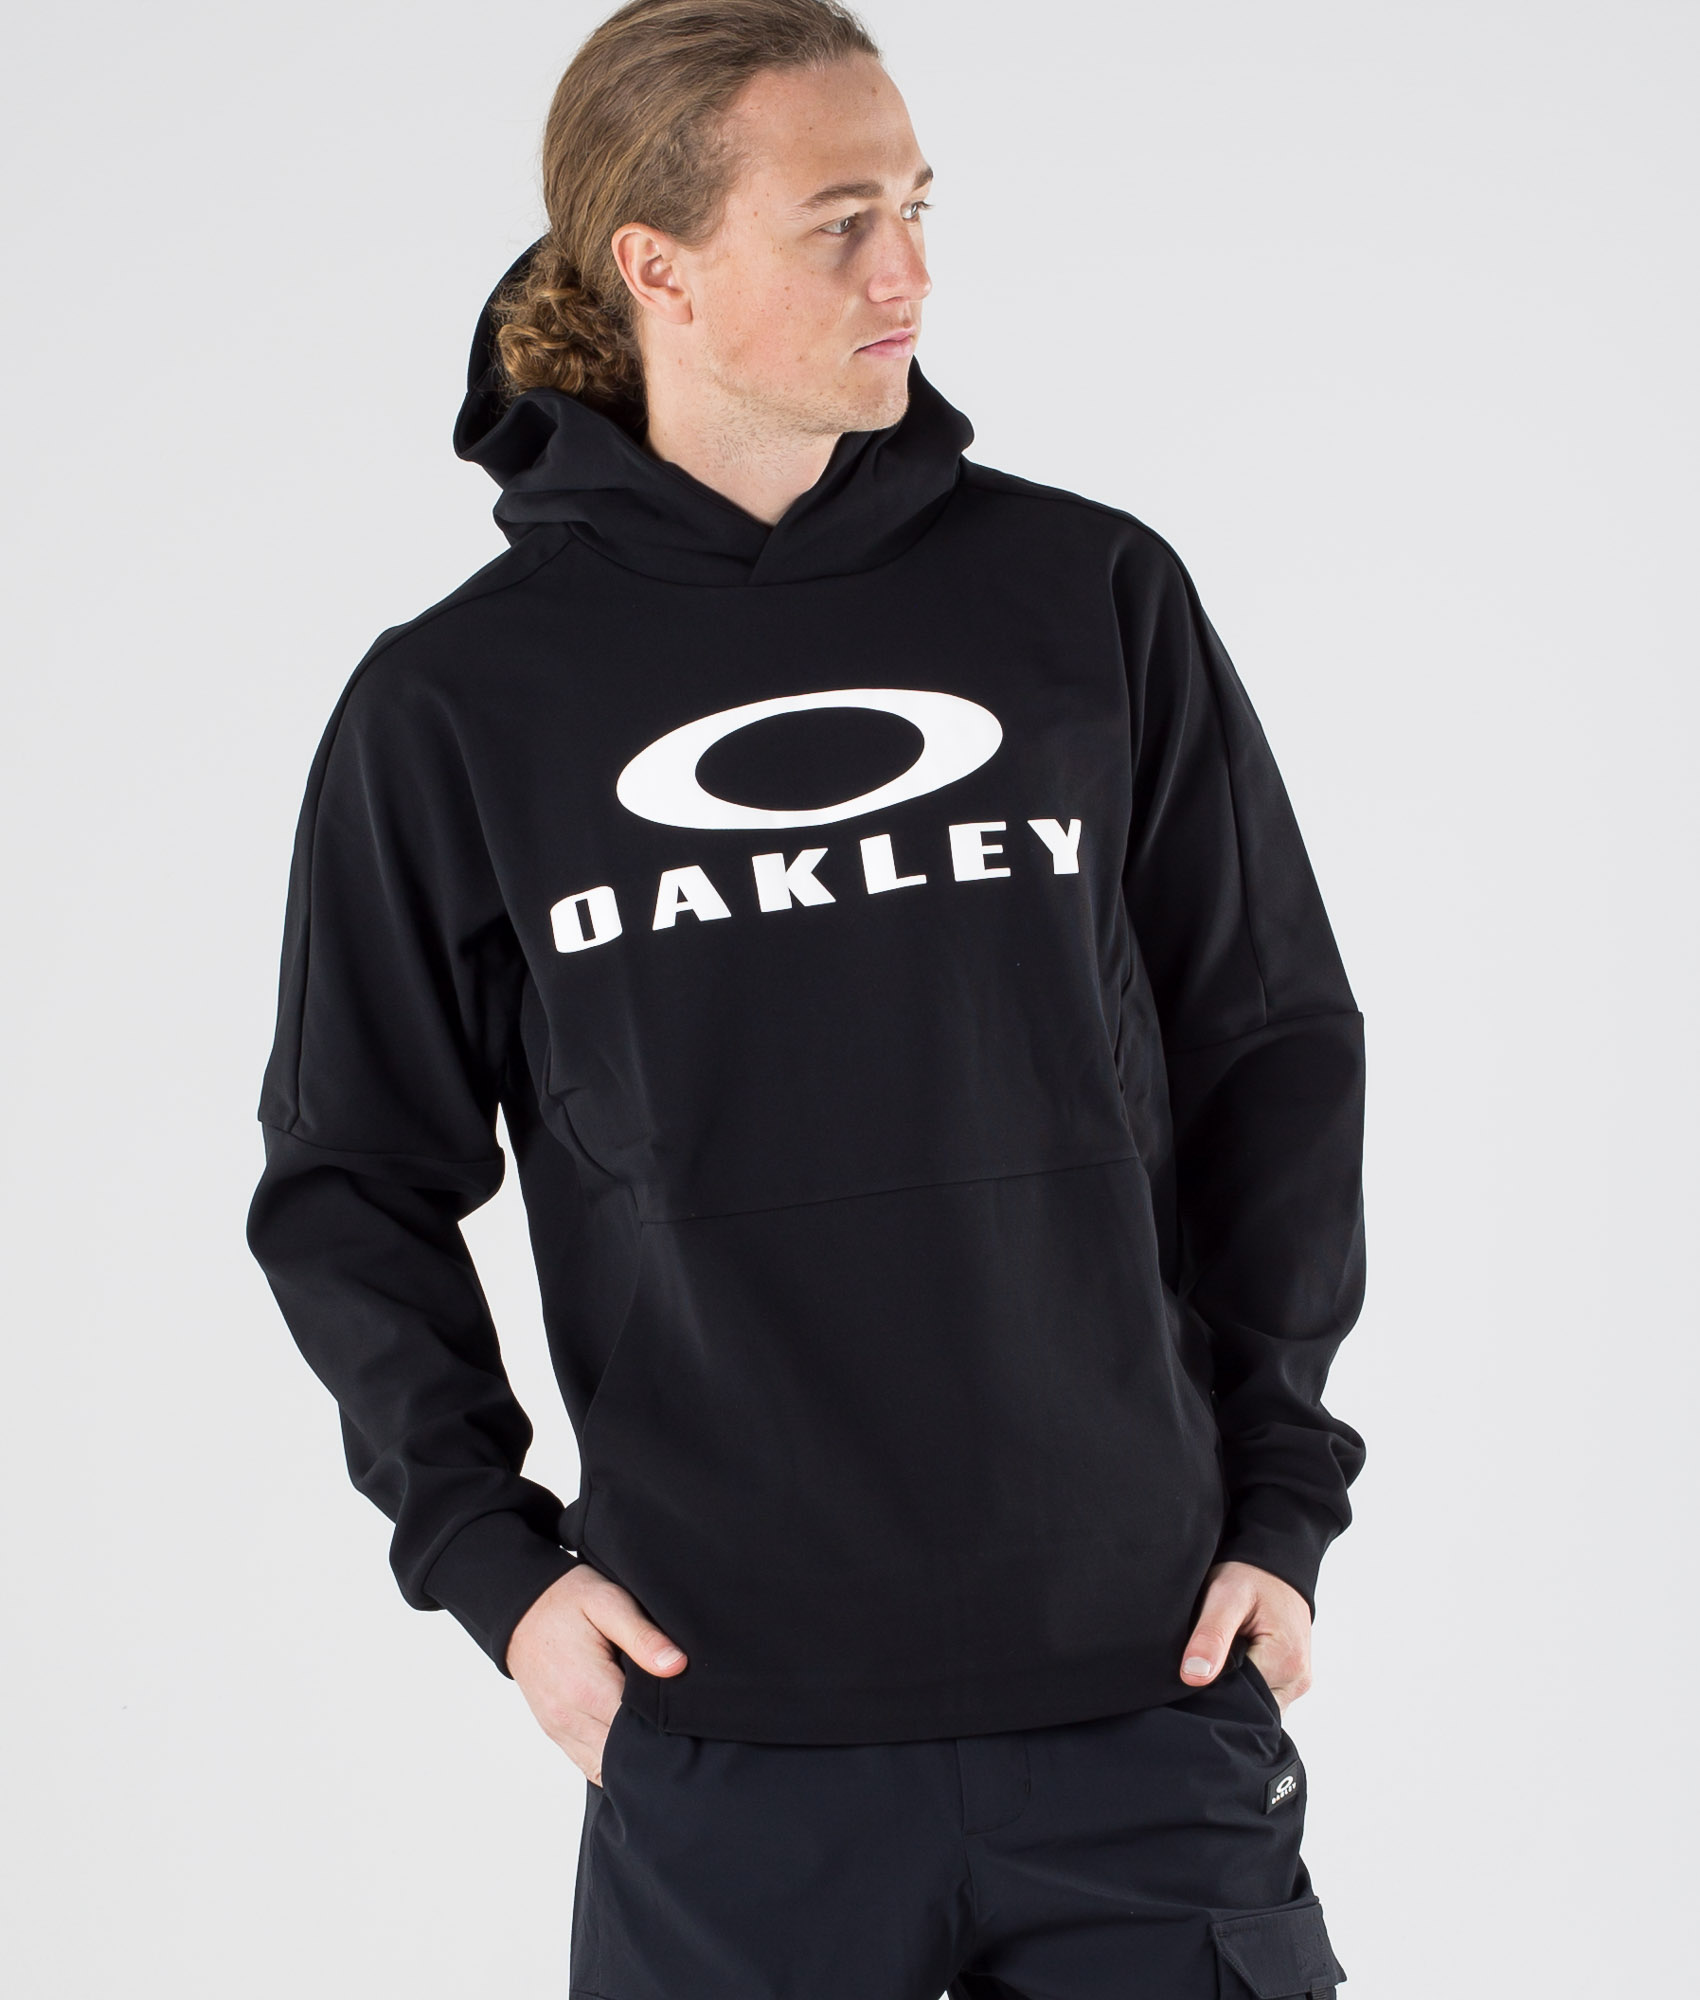 oakley hoodie jacket